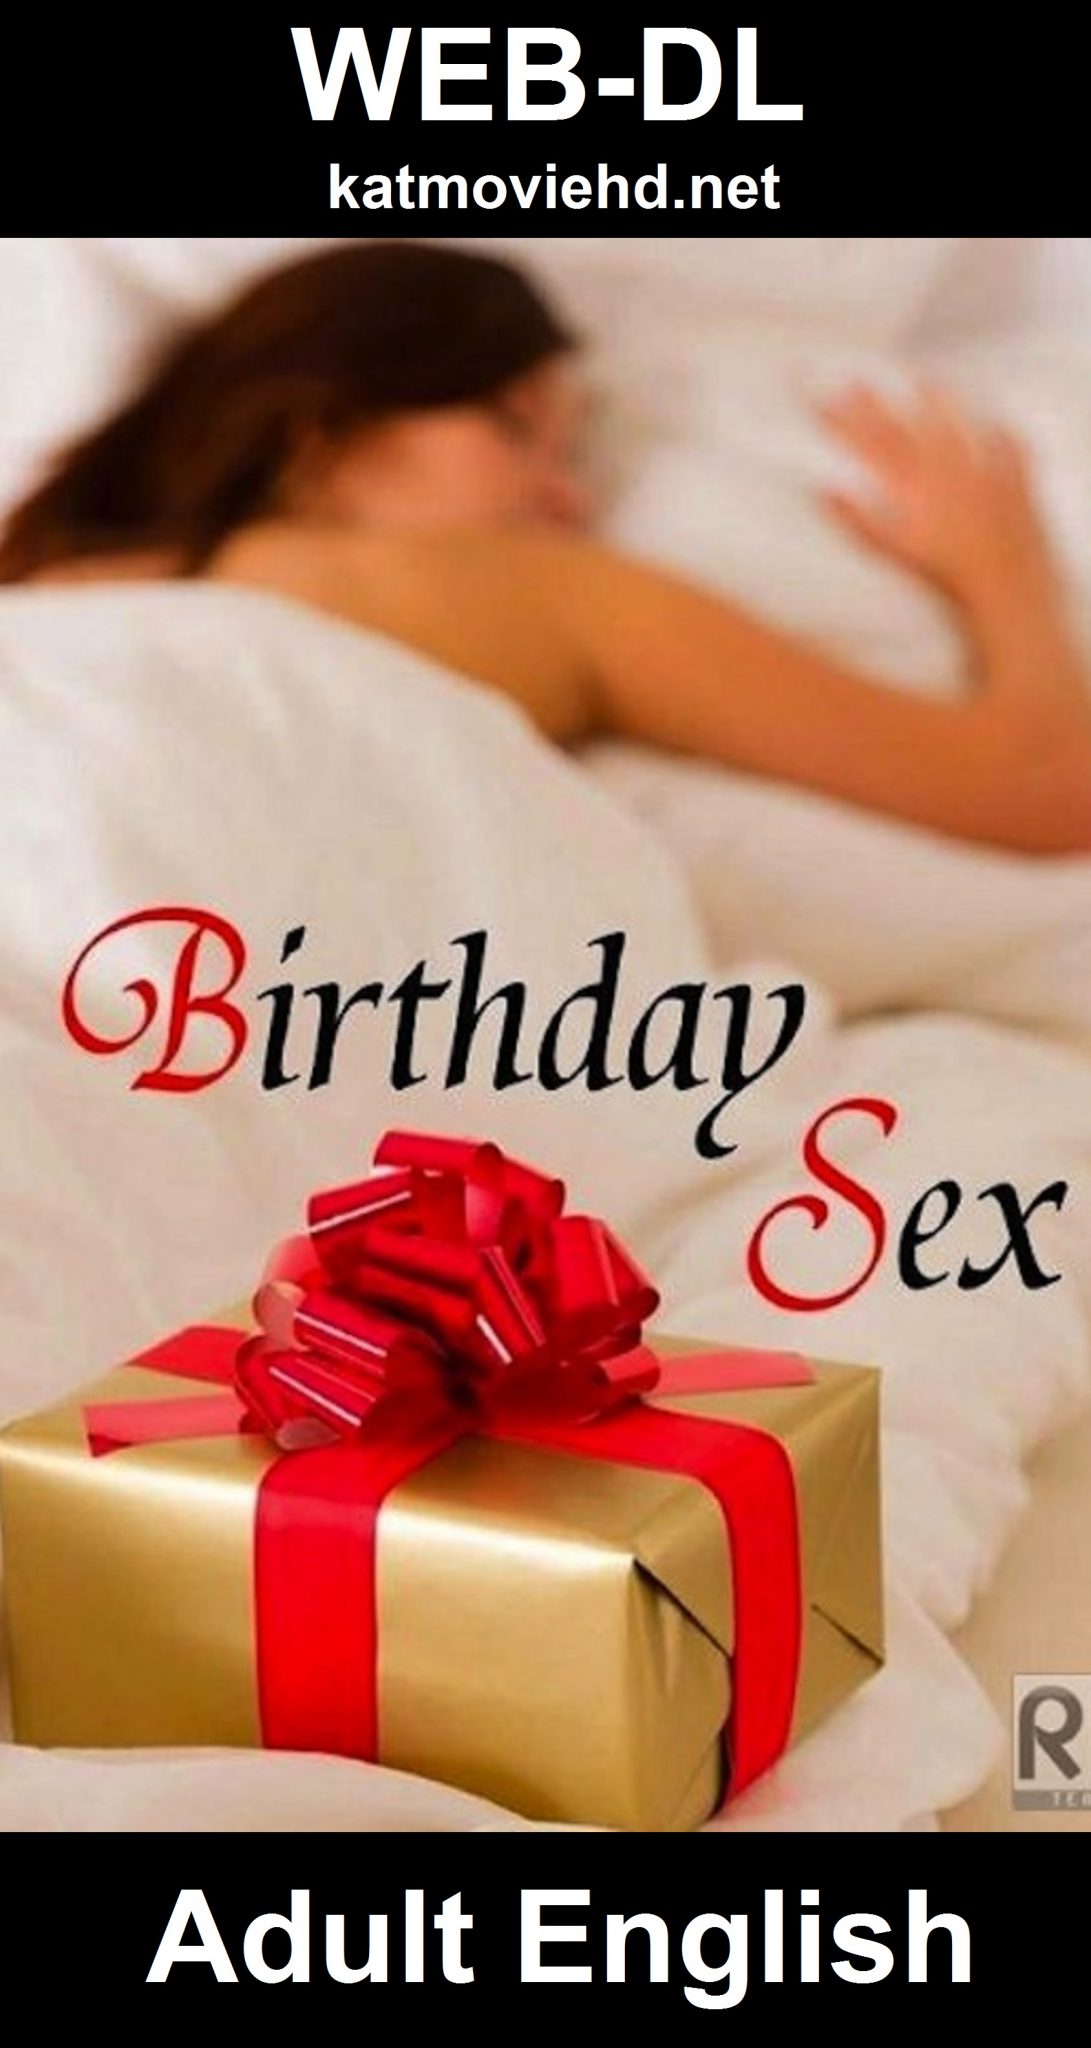 [18+] Birthday Sex 2012 720p 480p x264 TV Movie WEB-DL English AAC 2.0 Download | Watch Online